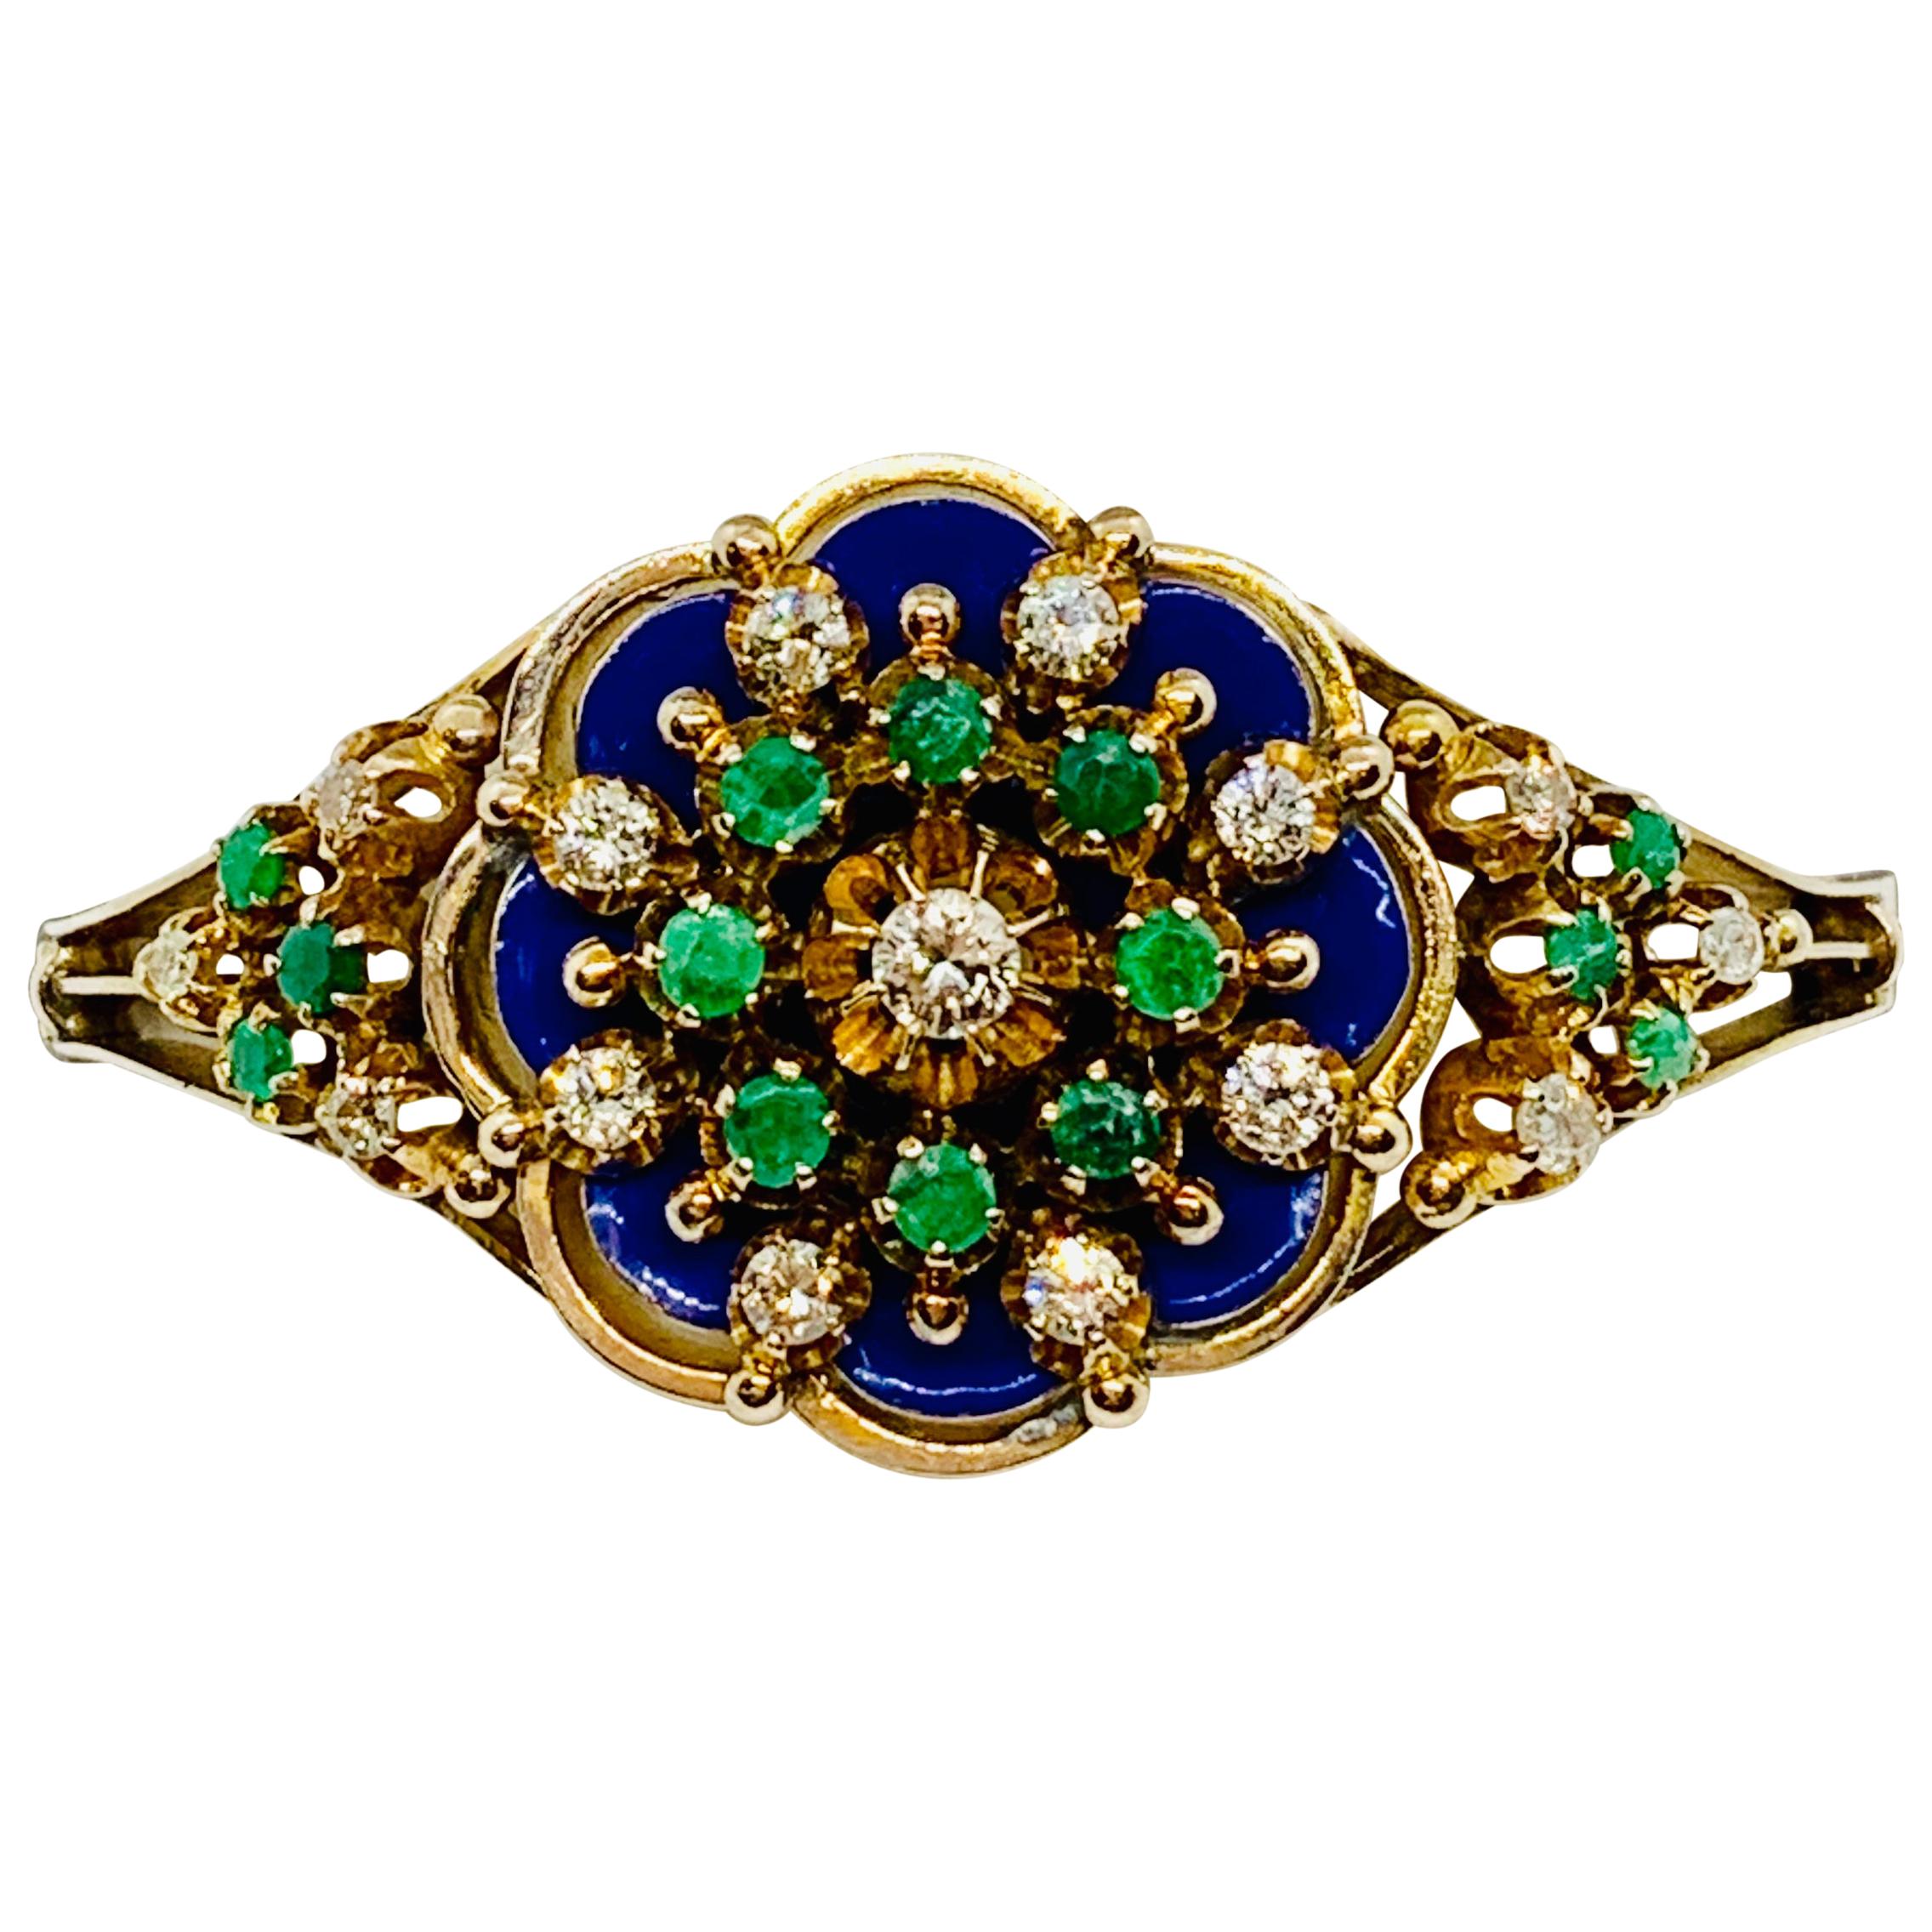 Vintage 10 Karat Yellow Gold, Enamel, Diamond and Emerald Bangle Bracelet